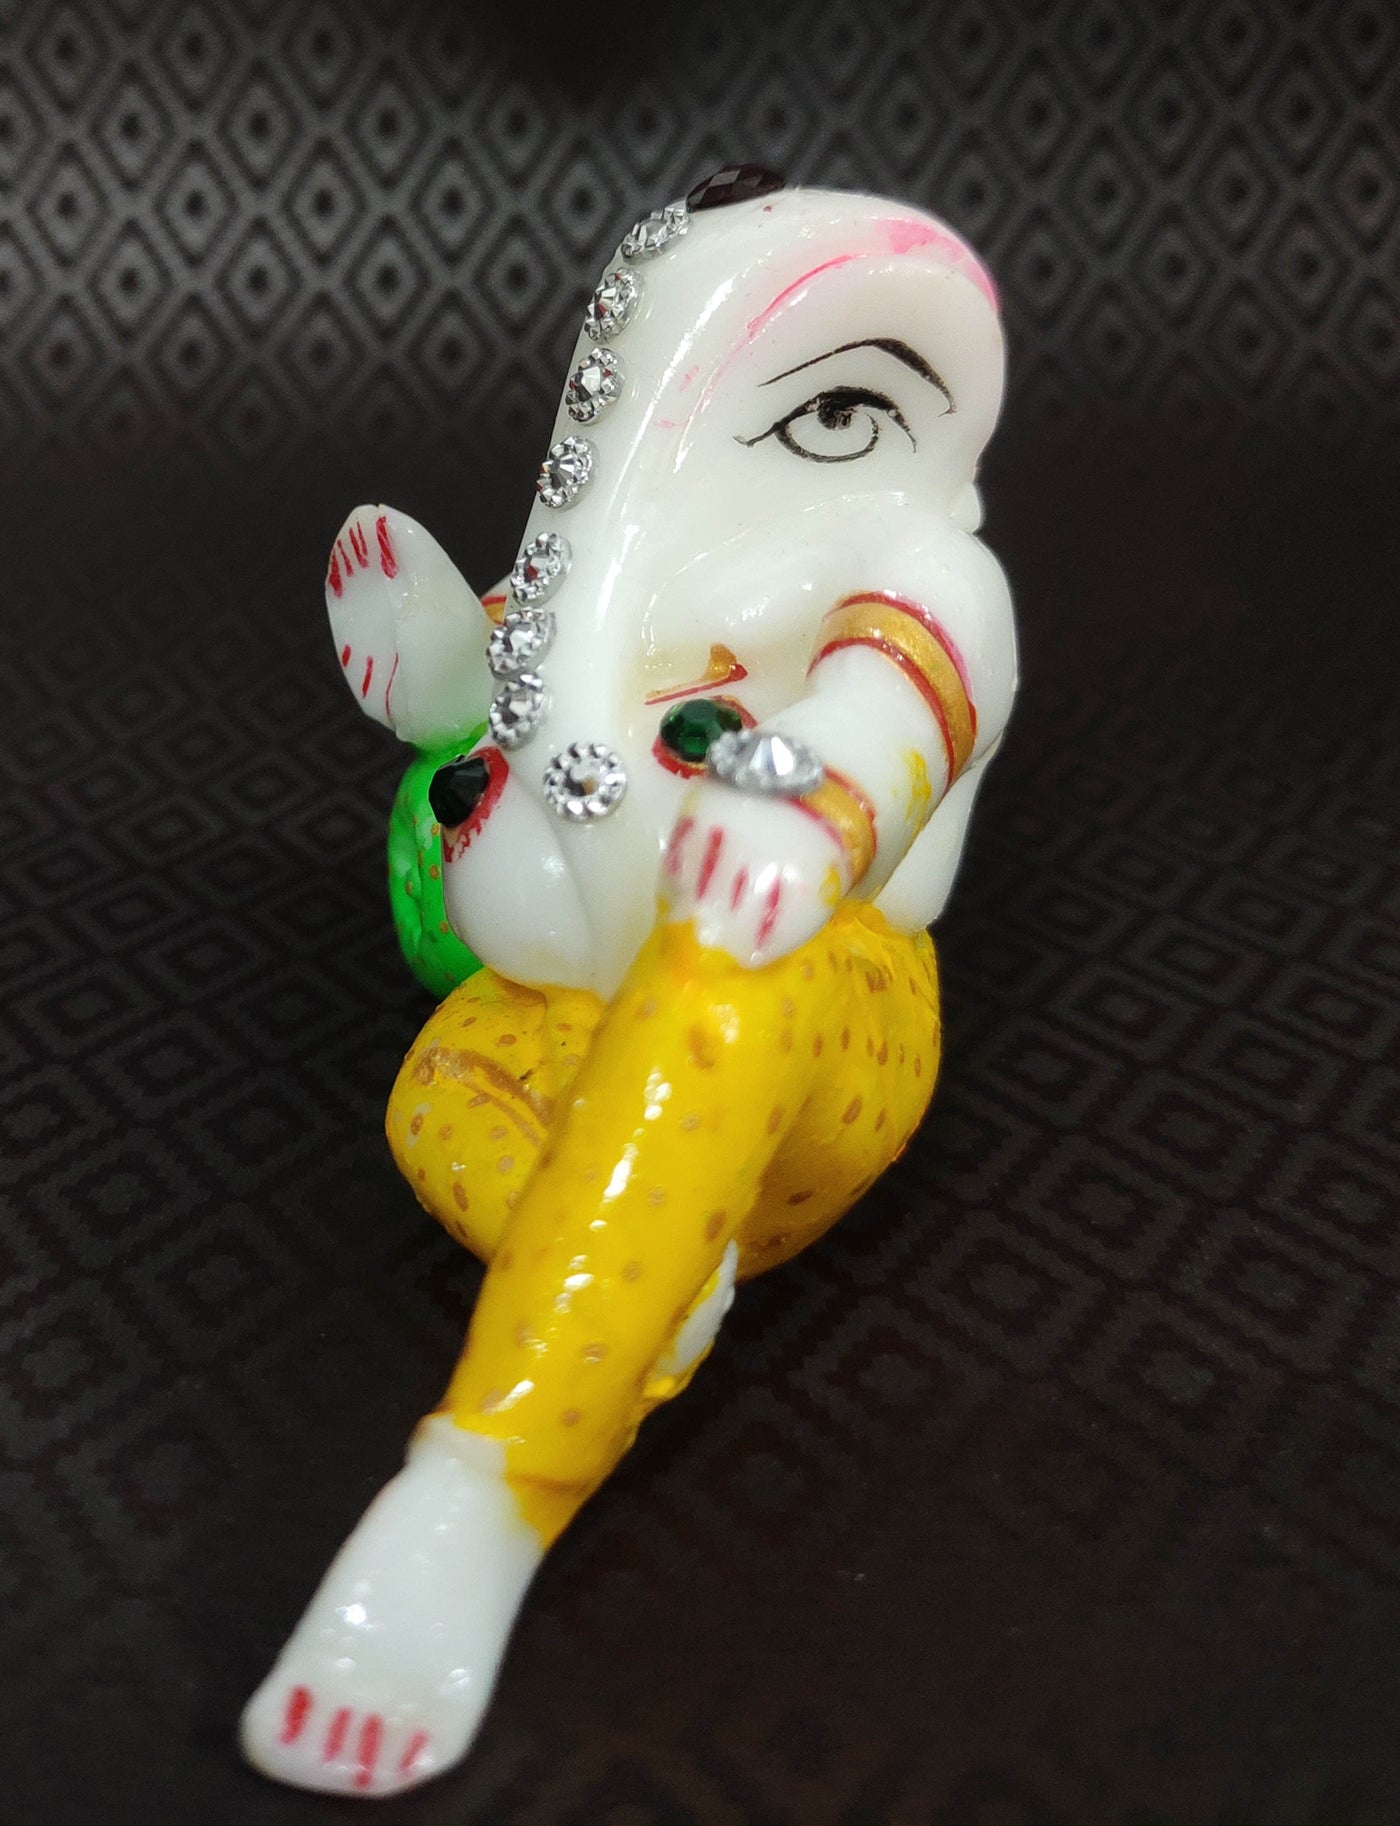 40 Rs each on Purchasing in bulk 📱at 8619550223 Mini Showpiece Mini Ganesh Ji Statue 🕉 for Return gifting 🎁 & Decoration in Ganesh Chaturthi , Diwali Decor, Mandir Pooja